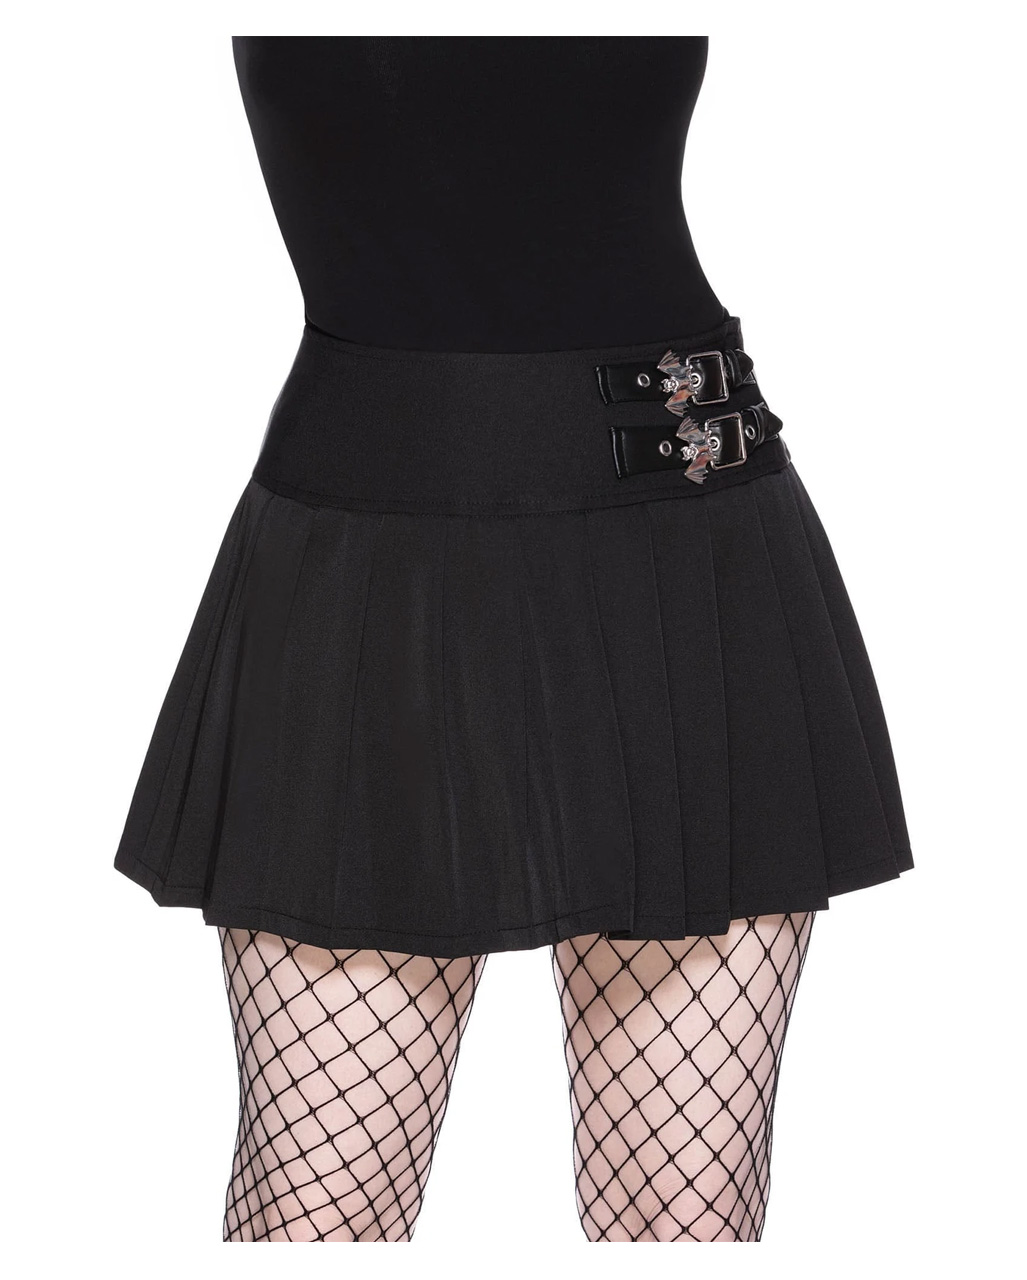 KILLSTAR Bat Girl Mini Skirt | Buy Gothic Clothing | Horror-Shop.com